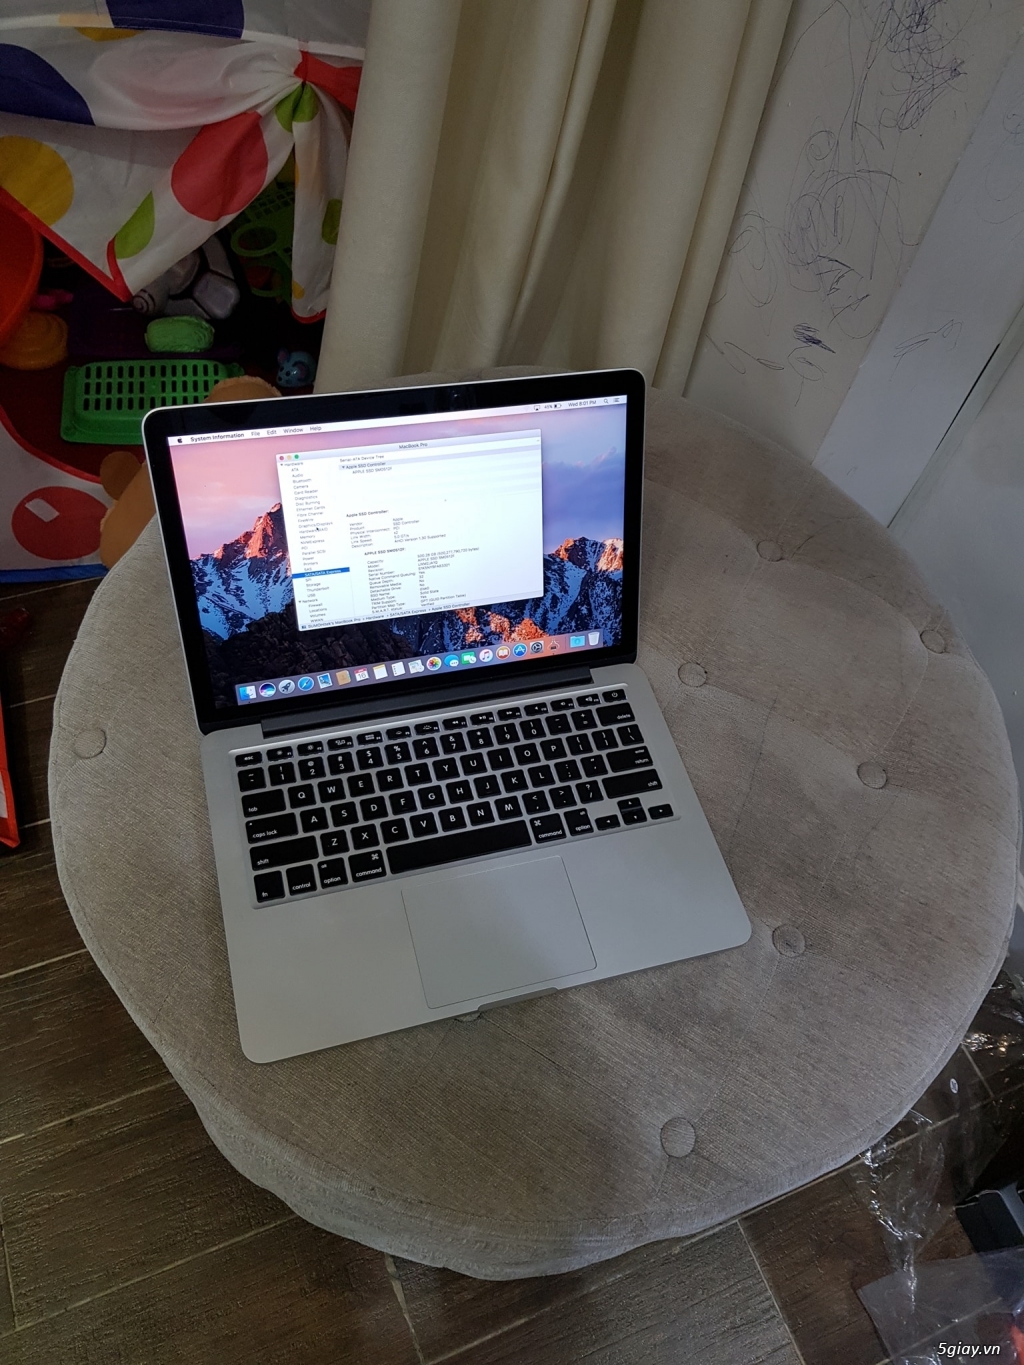 MacBook Pro (Retina, 13-inch, Mid 2014) - 2